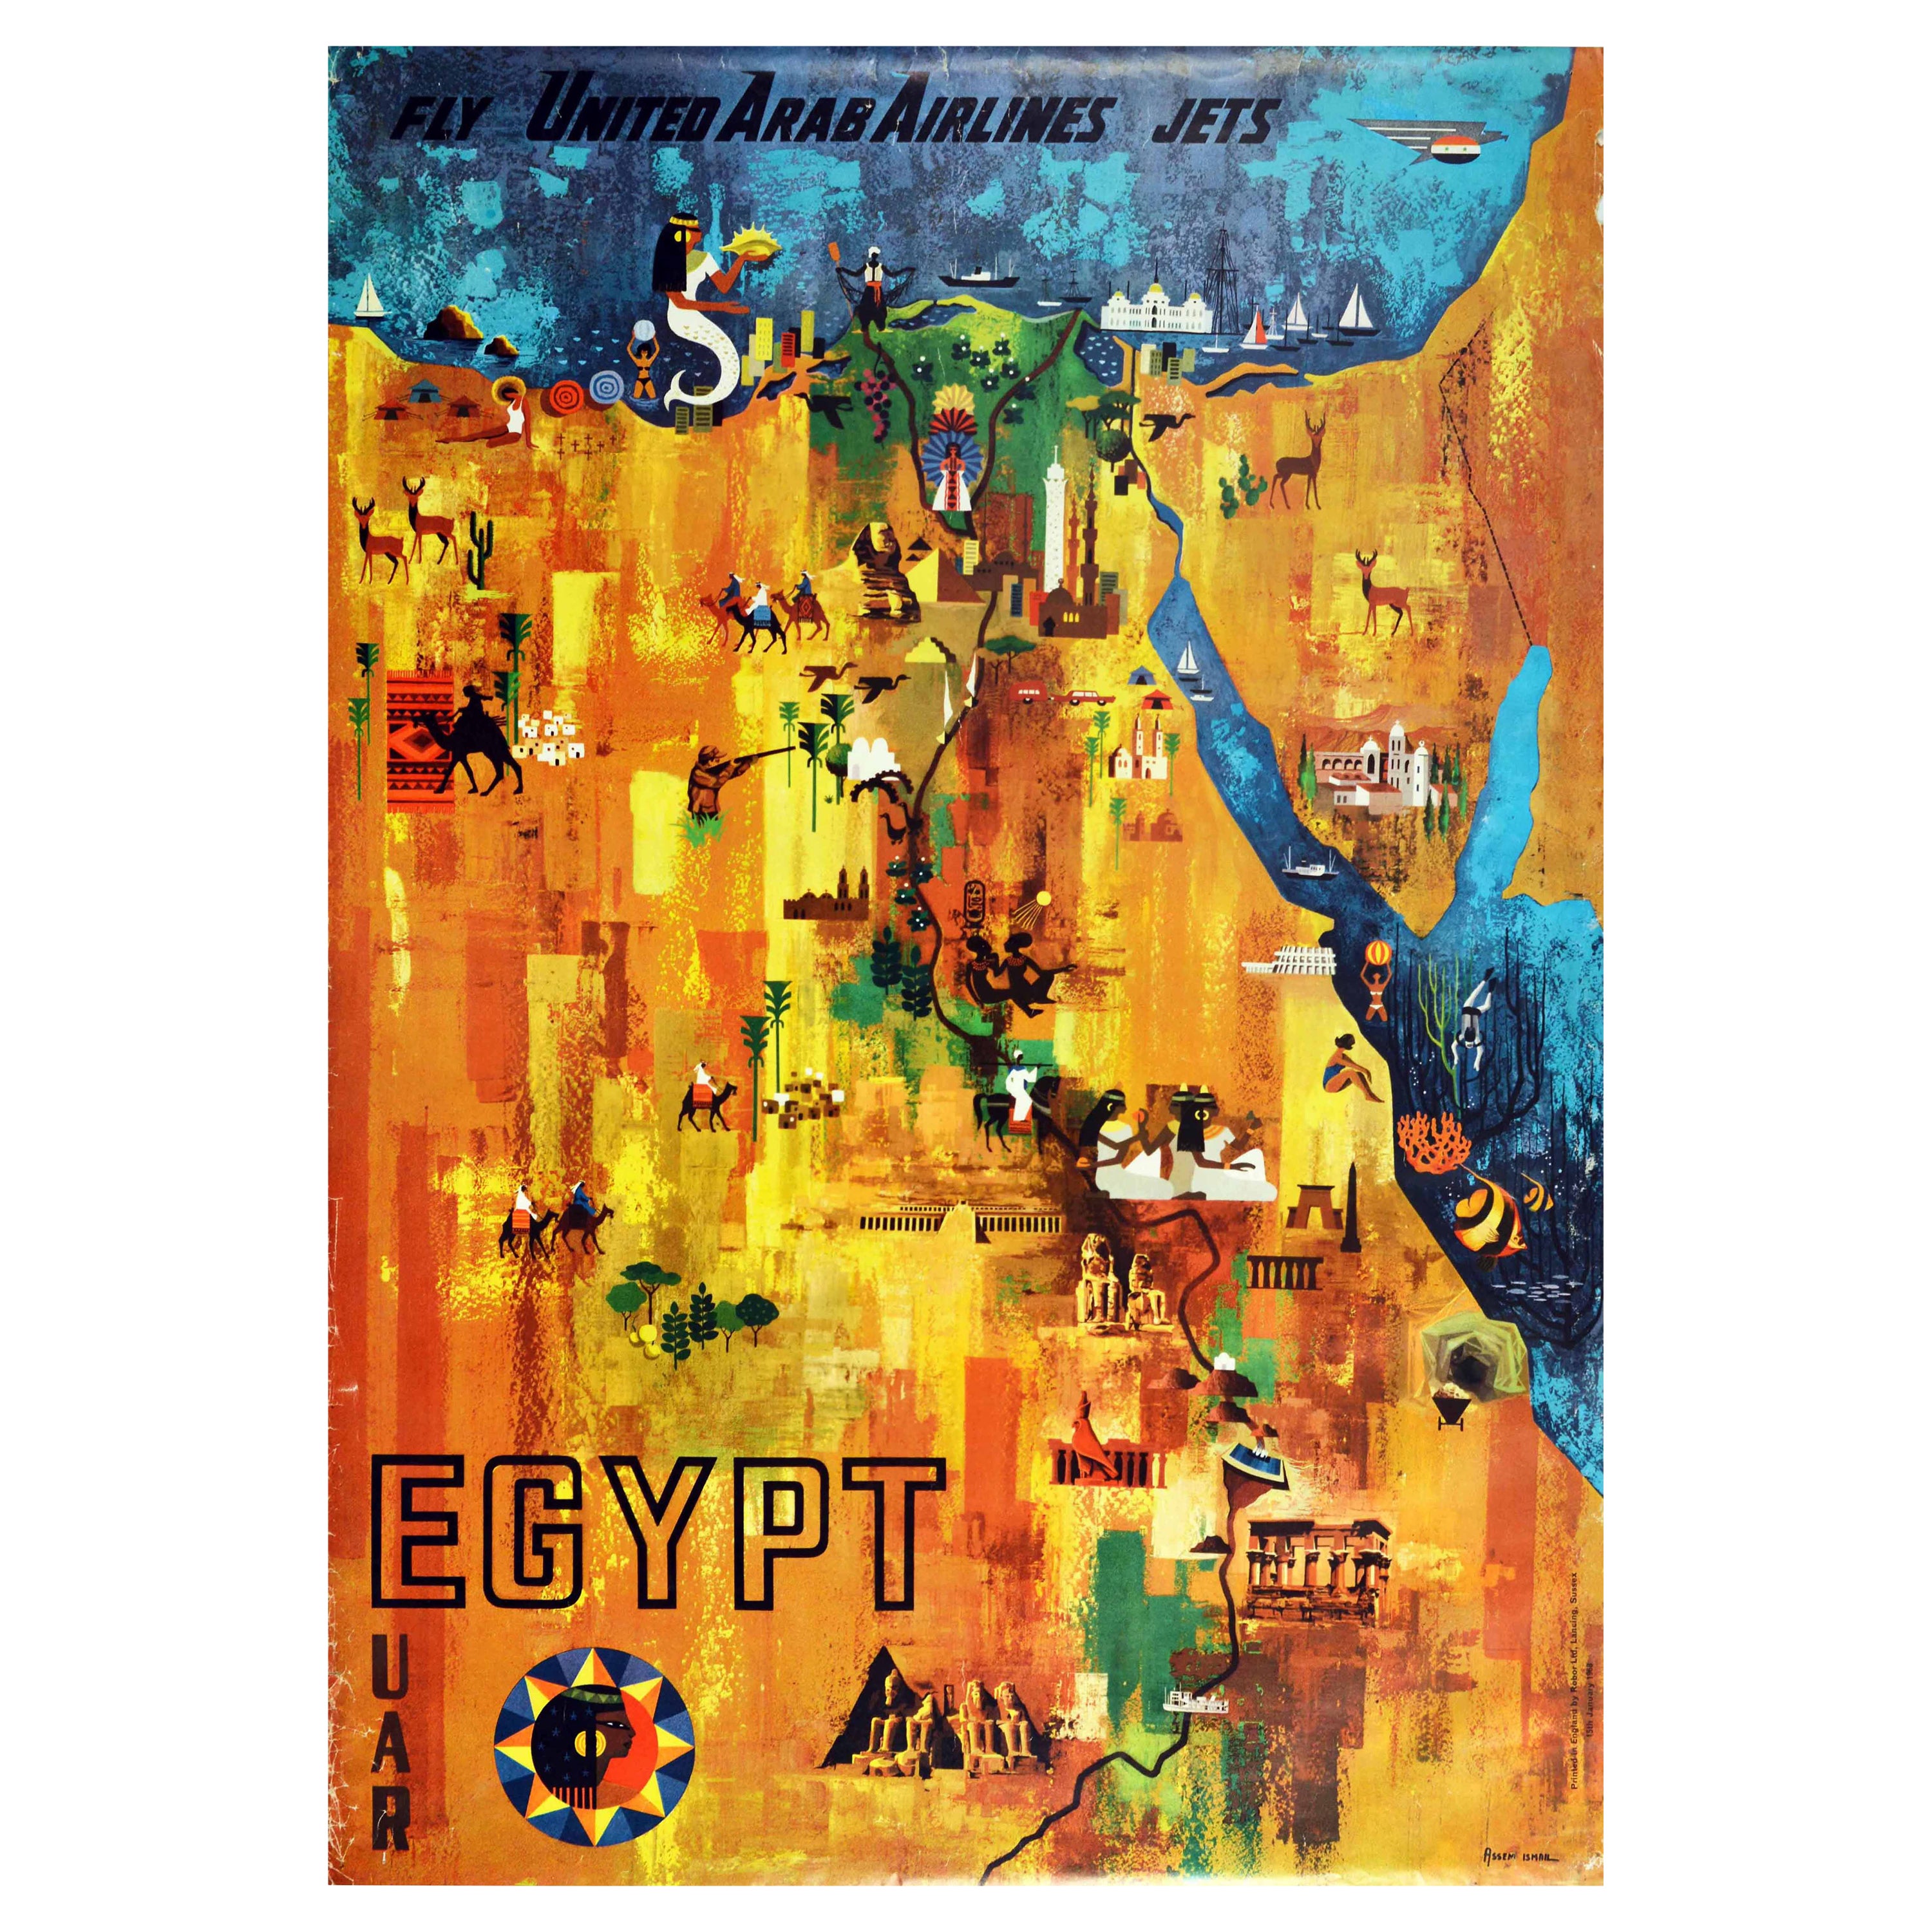 Original Vintage Map Poster Egypt United Arab Airlines Jets Pyramids River Nile